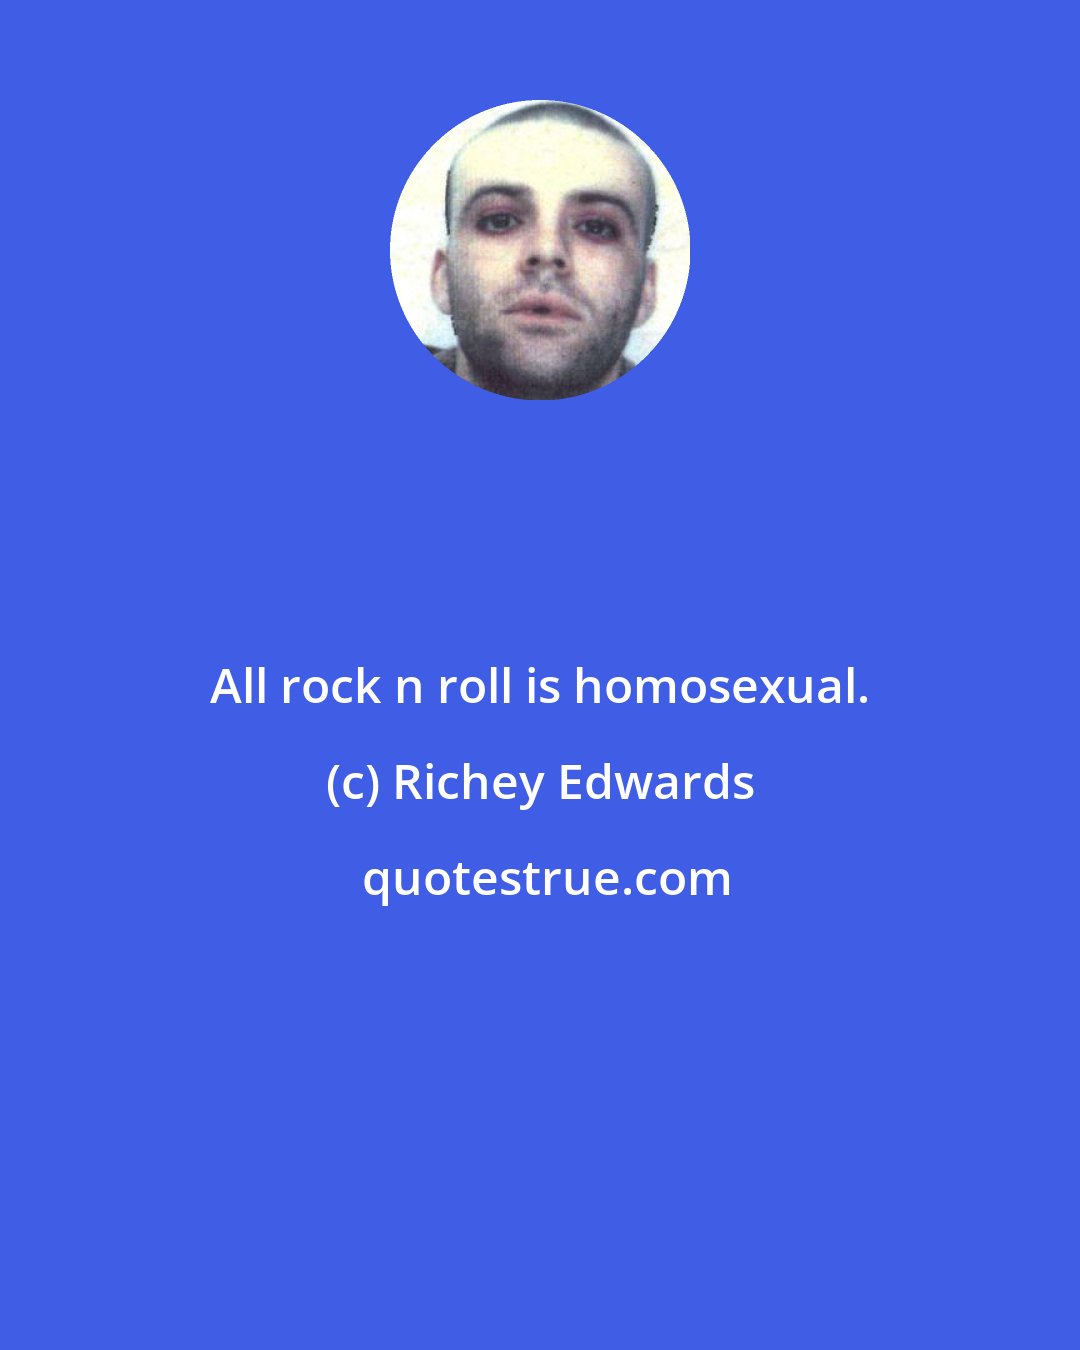 Richey Edwards: All rock n roll is homosexual.